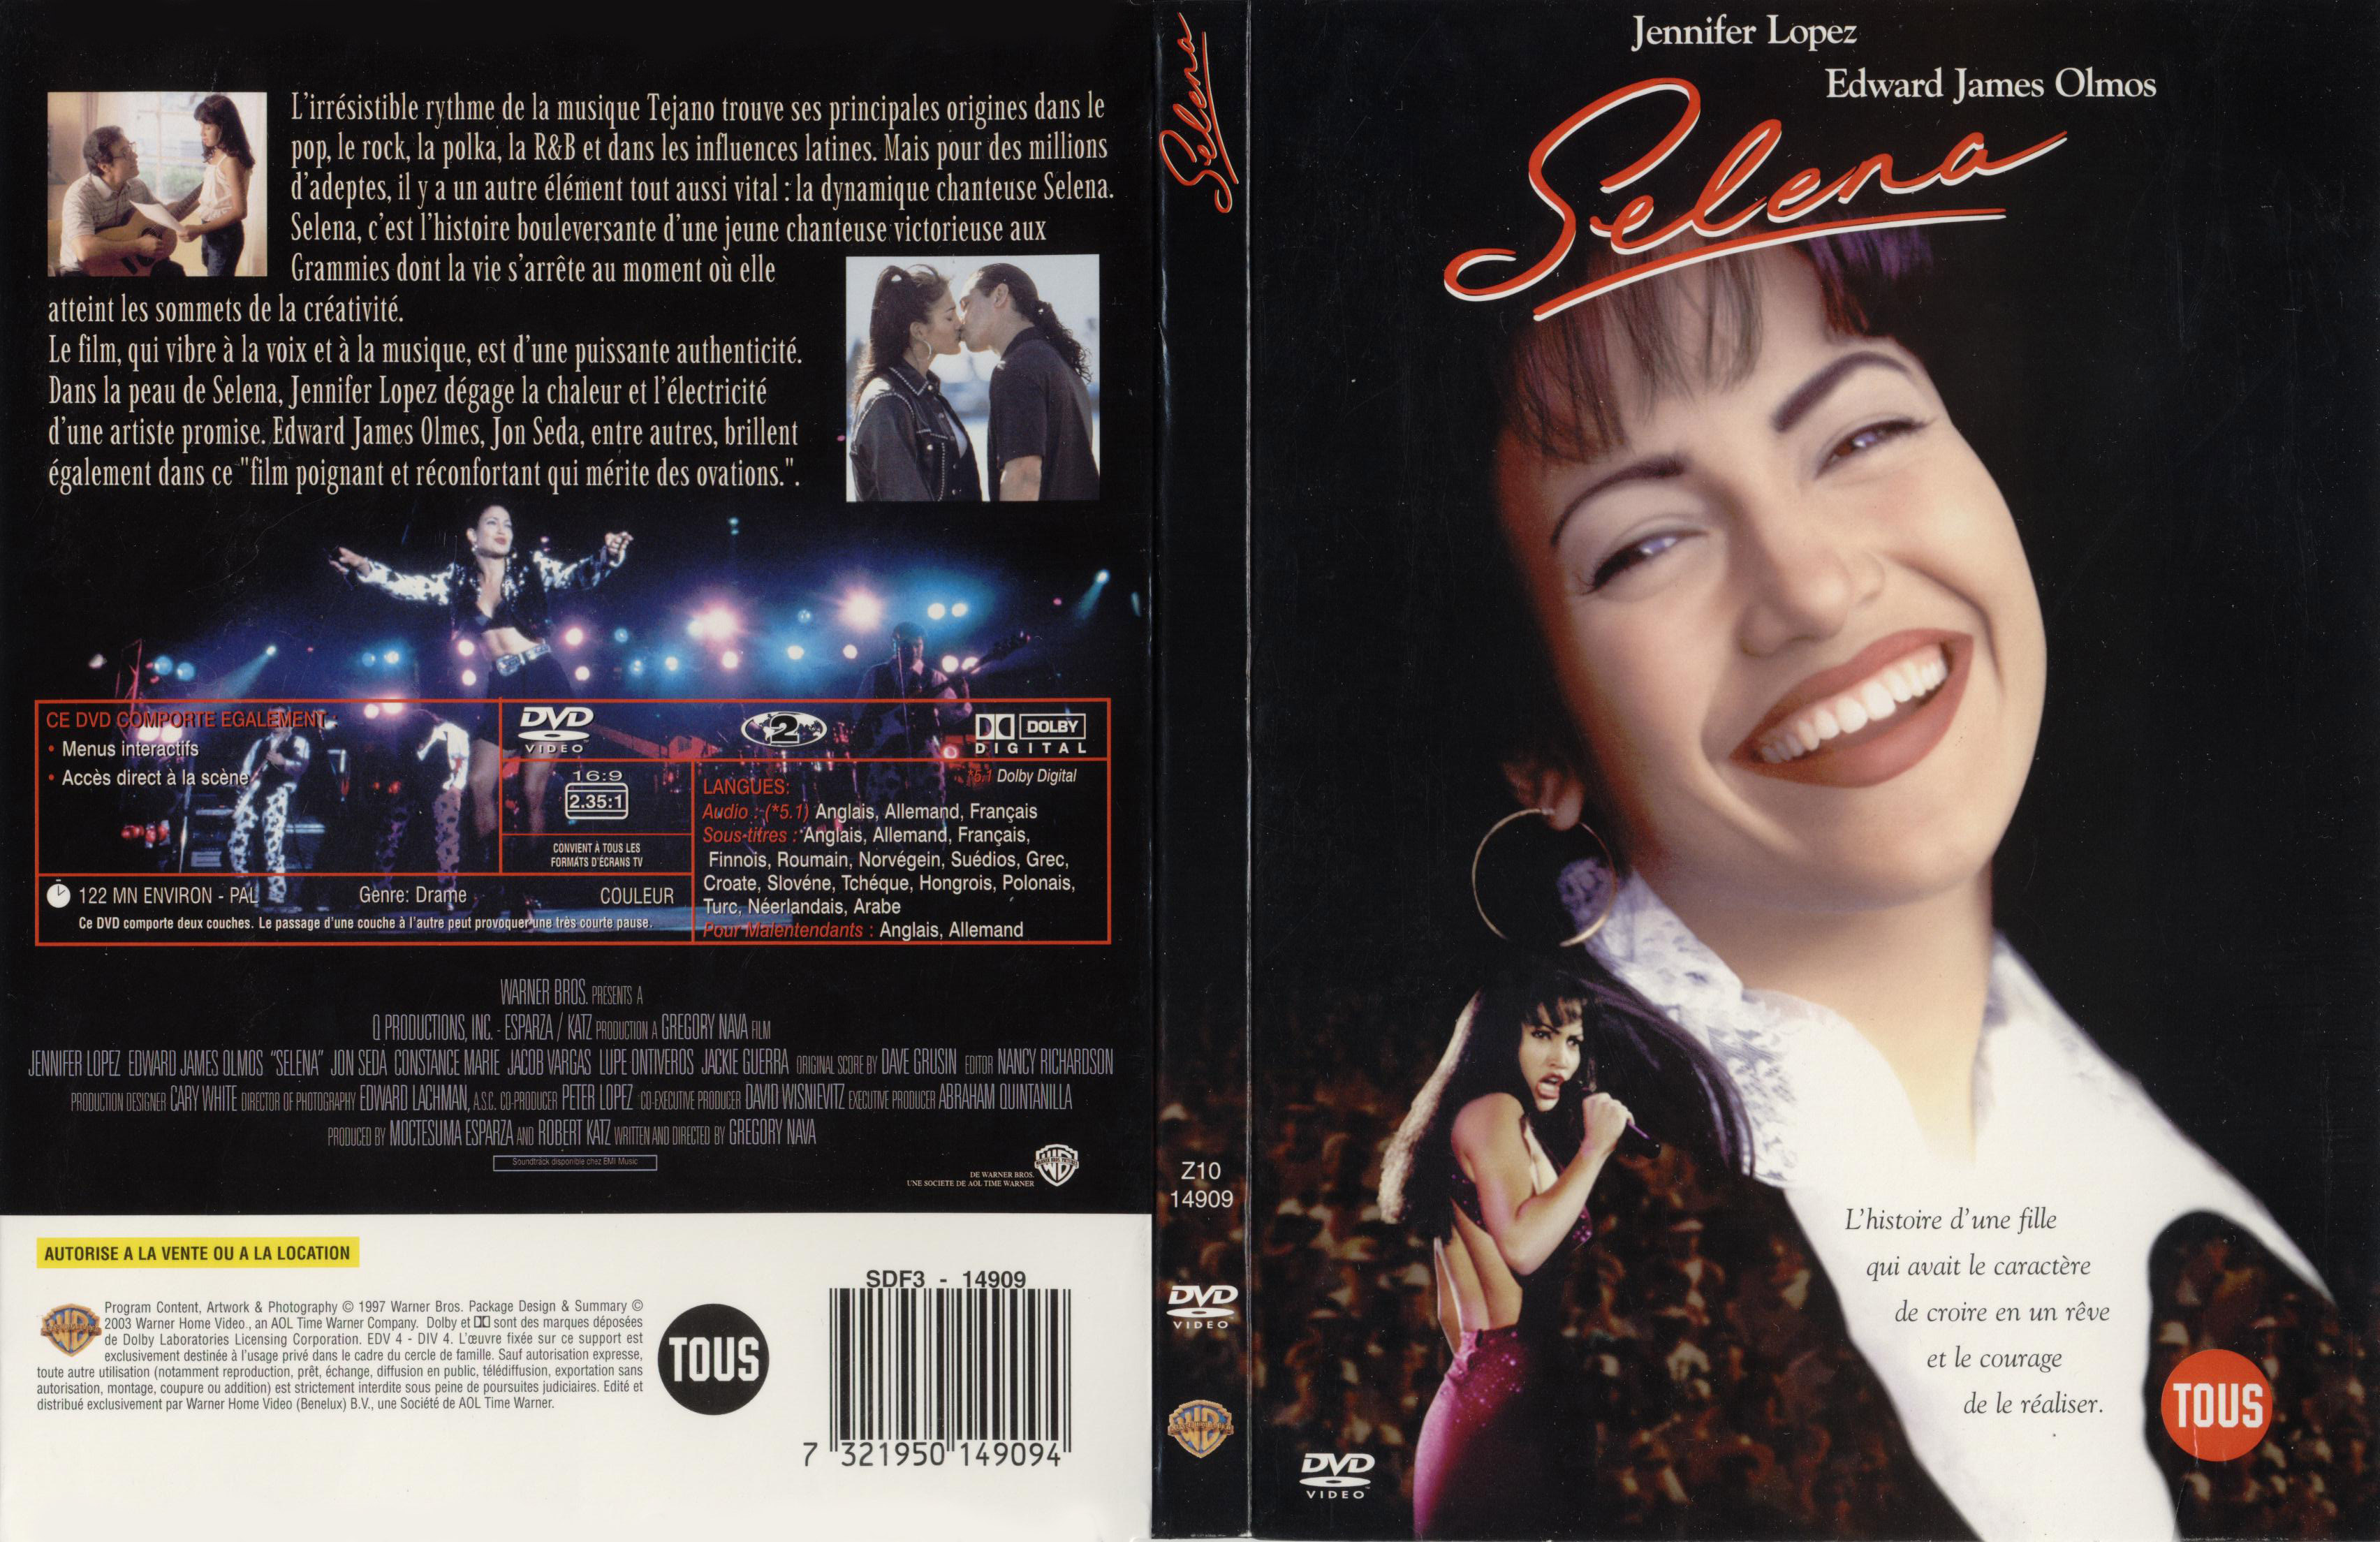 Jaquette DVD Selena